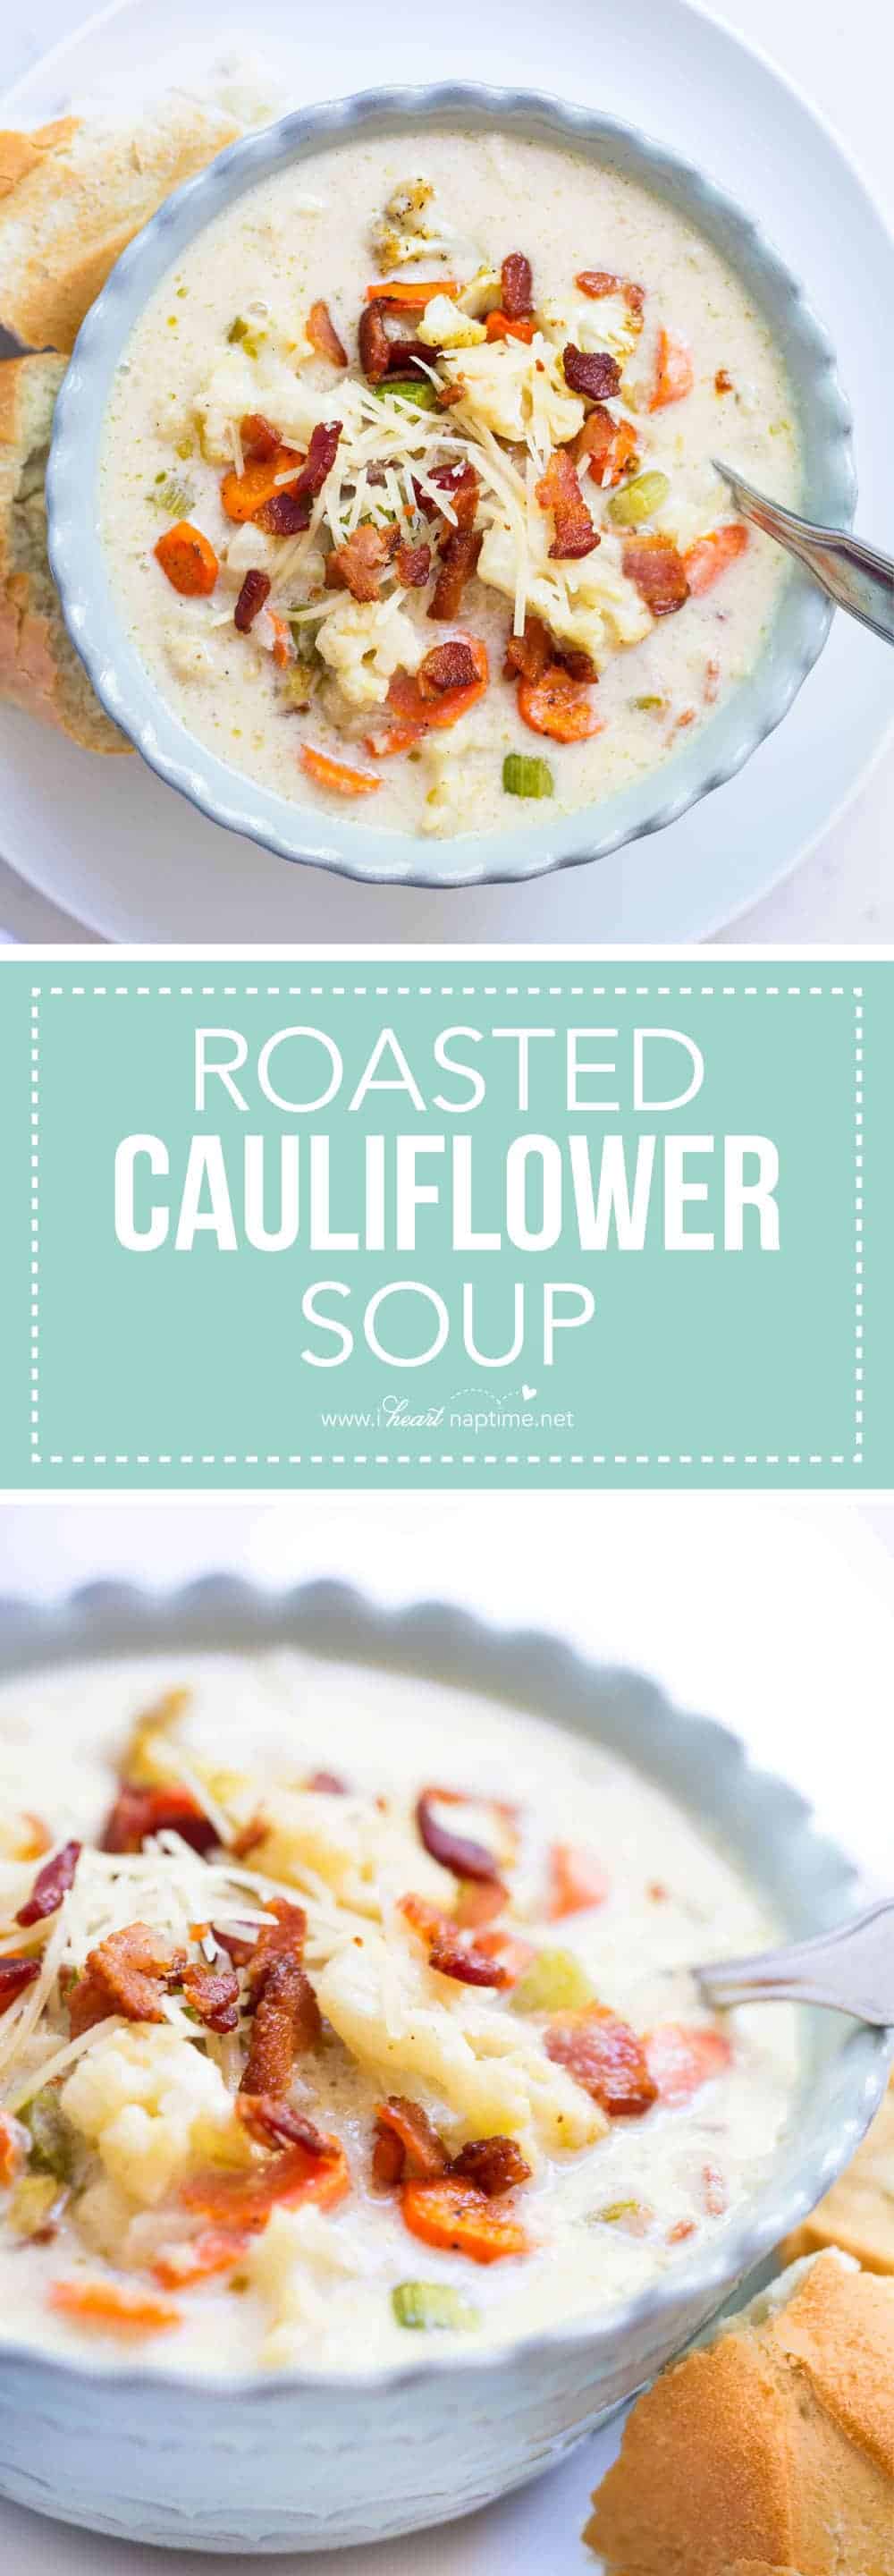 roasted cauliflower soup